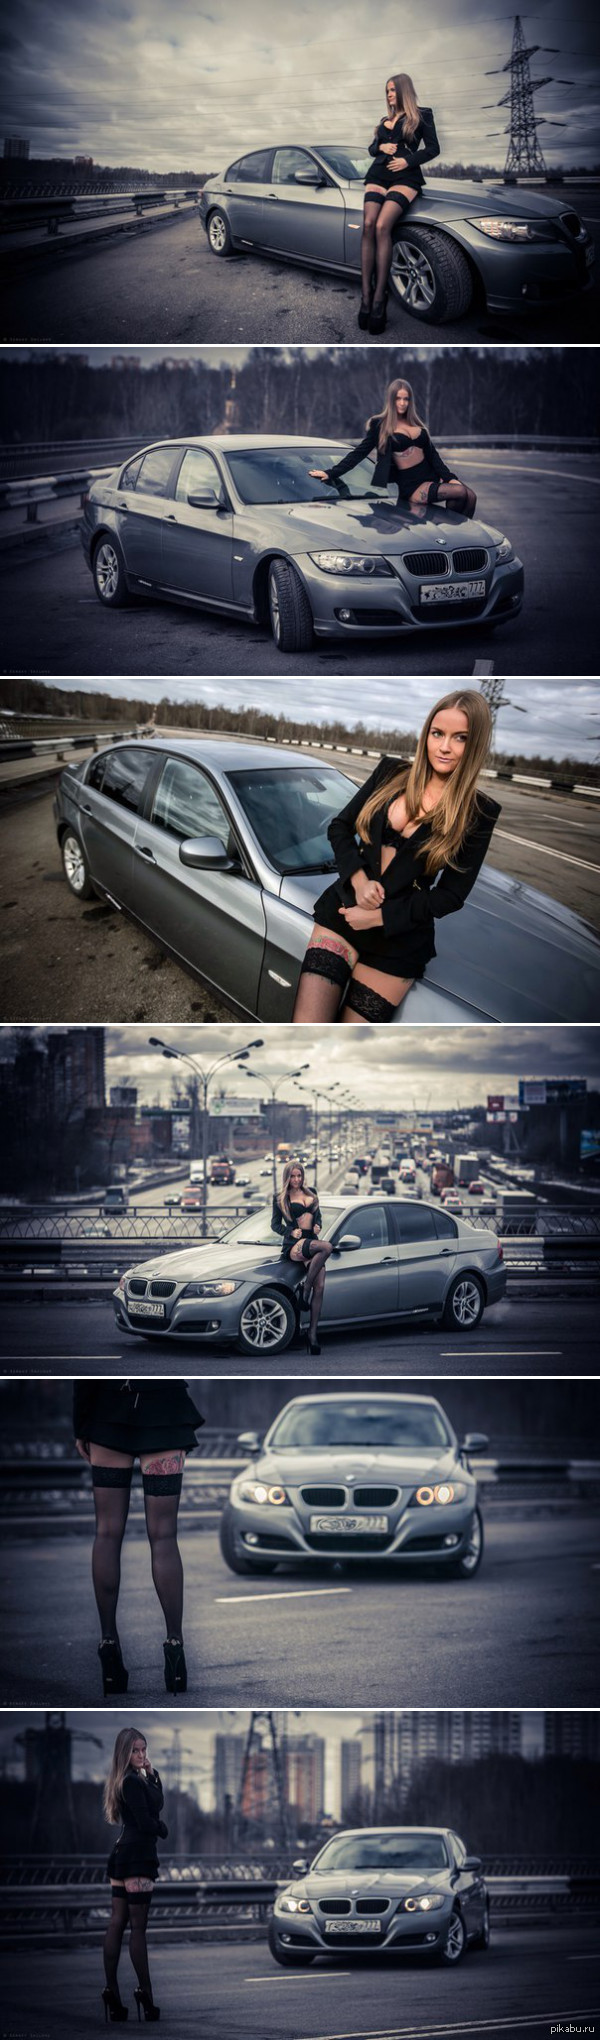 beautiful car and some beautiful erotica - NSFW, Bmw, Girls, Erotic, Sophia Temnikova, Longpost